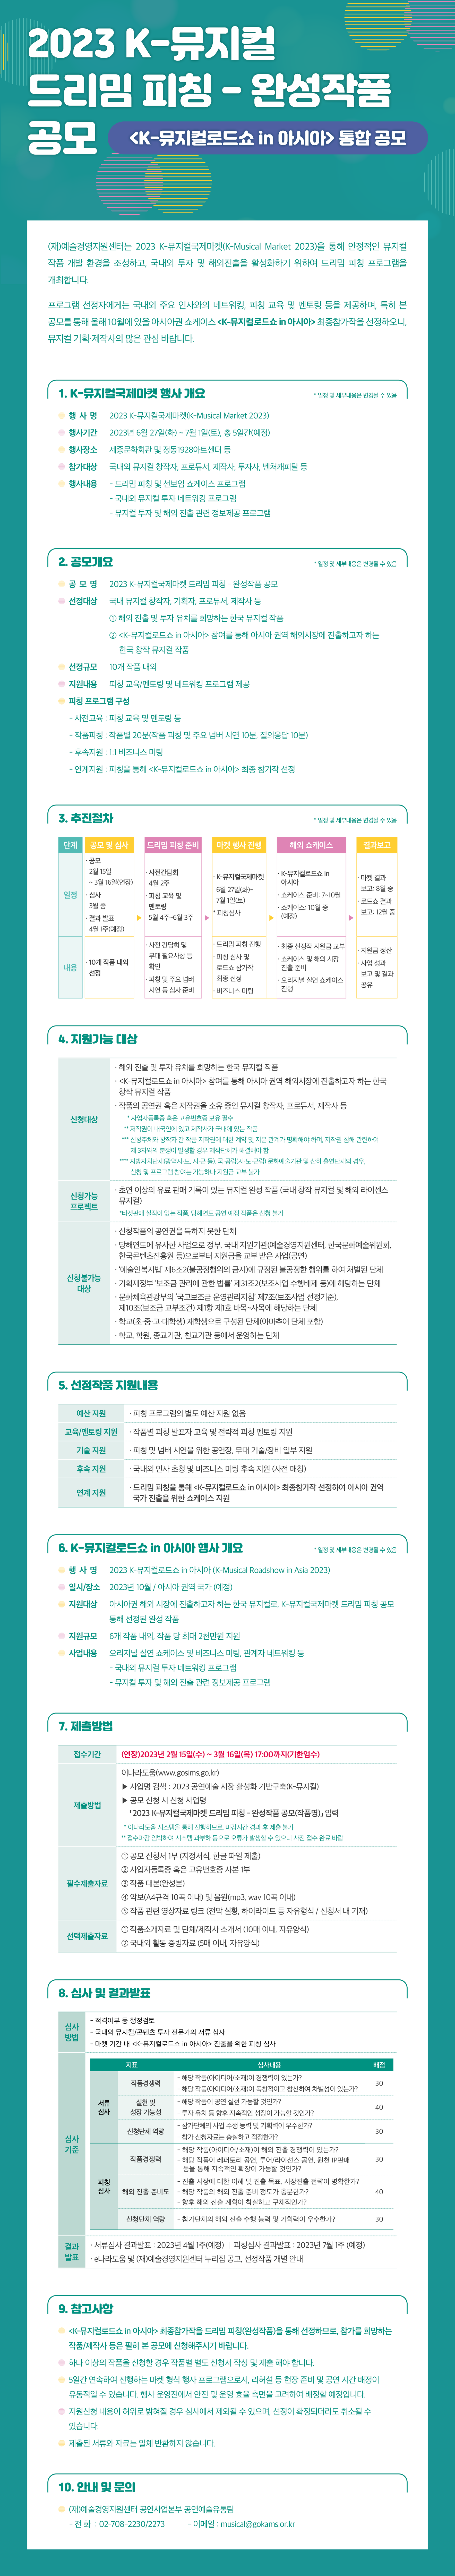 2023 K-뮤지컬국제마켓 드리밈 피칭 - 완성작품 공모